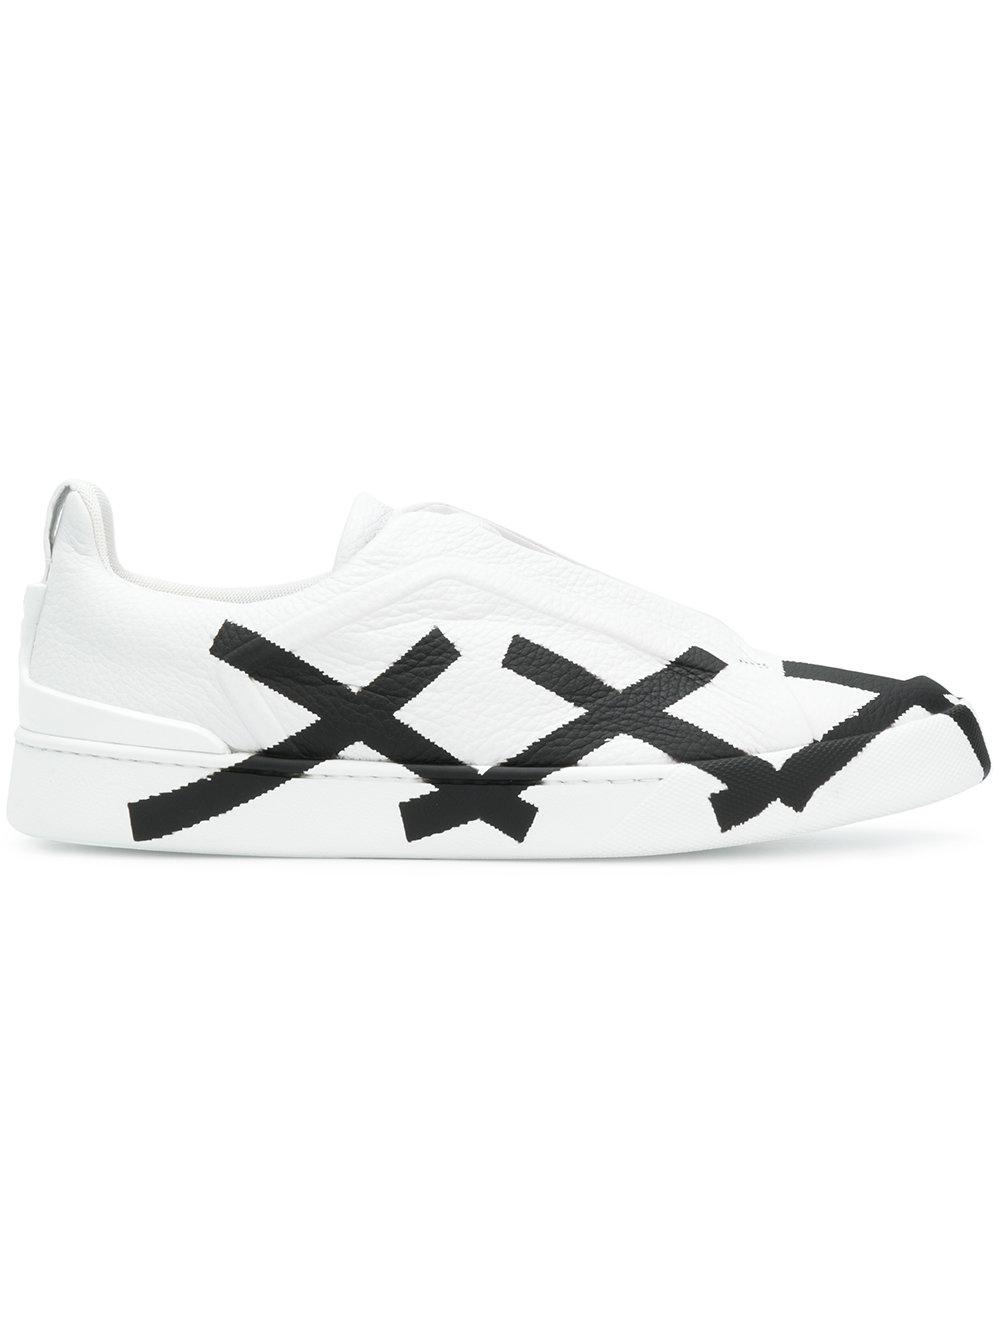 Ermenegildo Zegna Leather Triple Stitch Xxx Sneakers in White for Men - Lyst